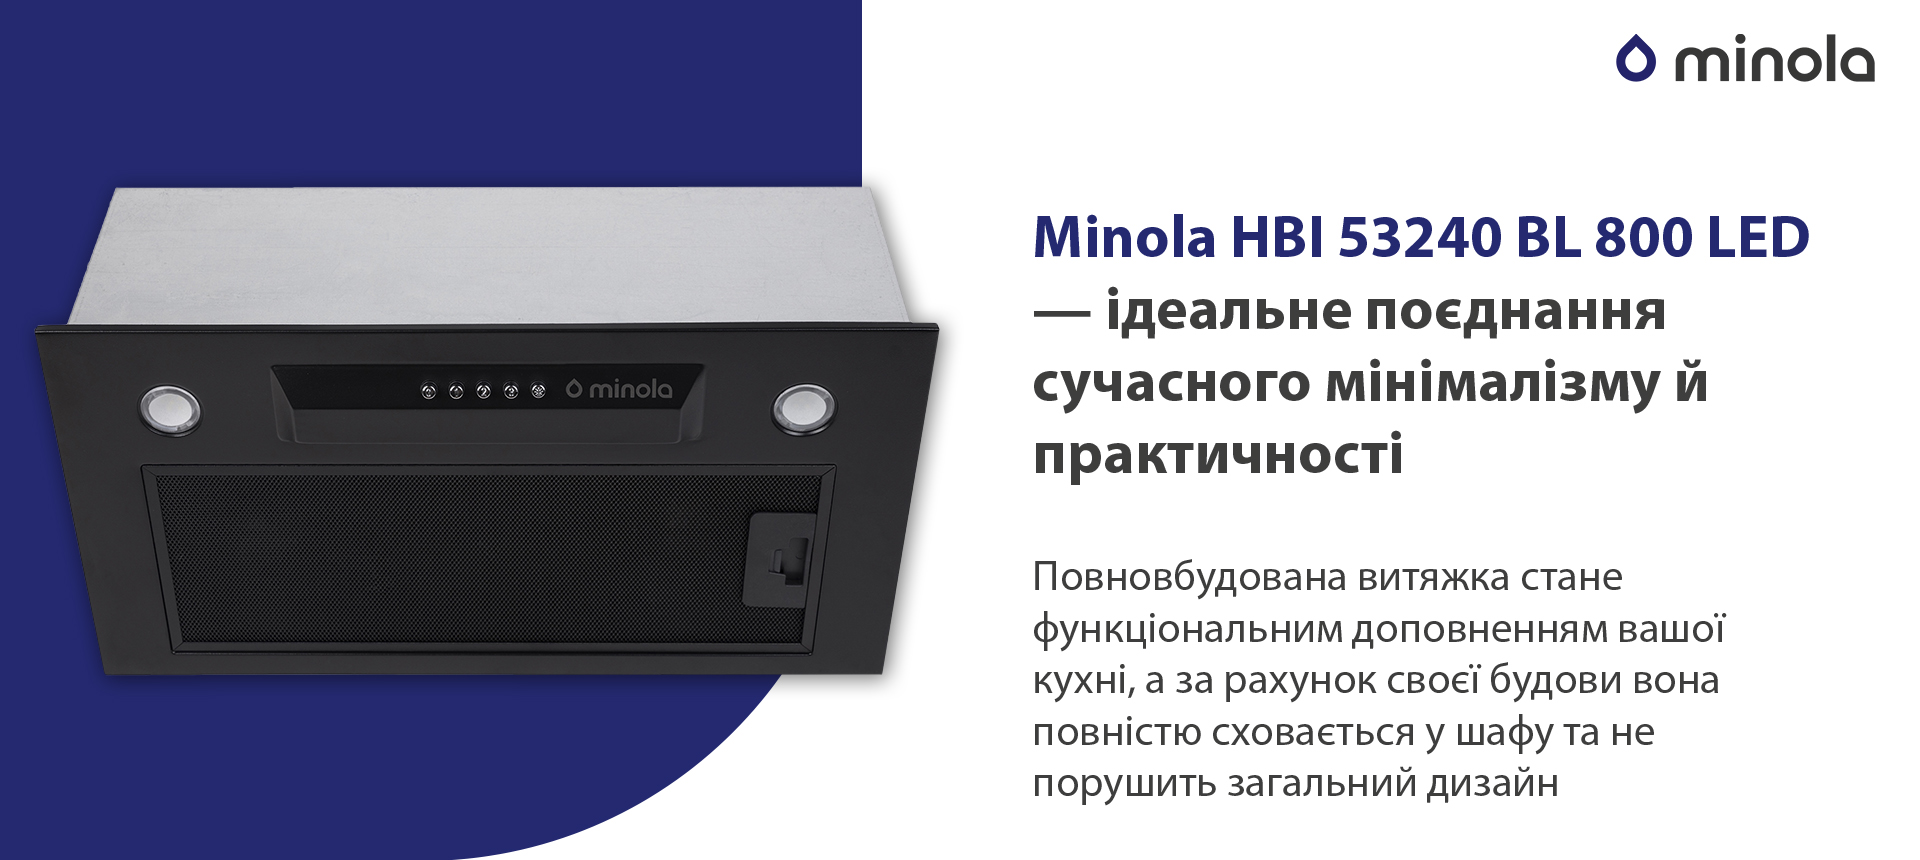 Minola HBI 53240 BL 800 LED в магазині в Києві - фото 10